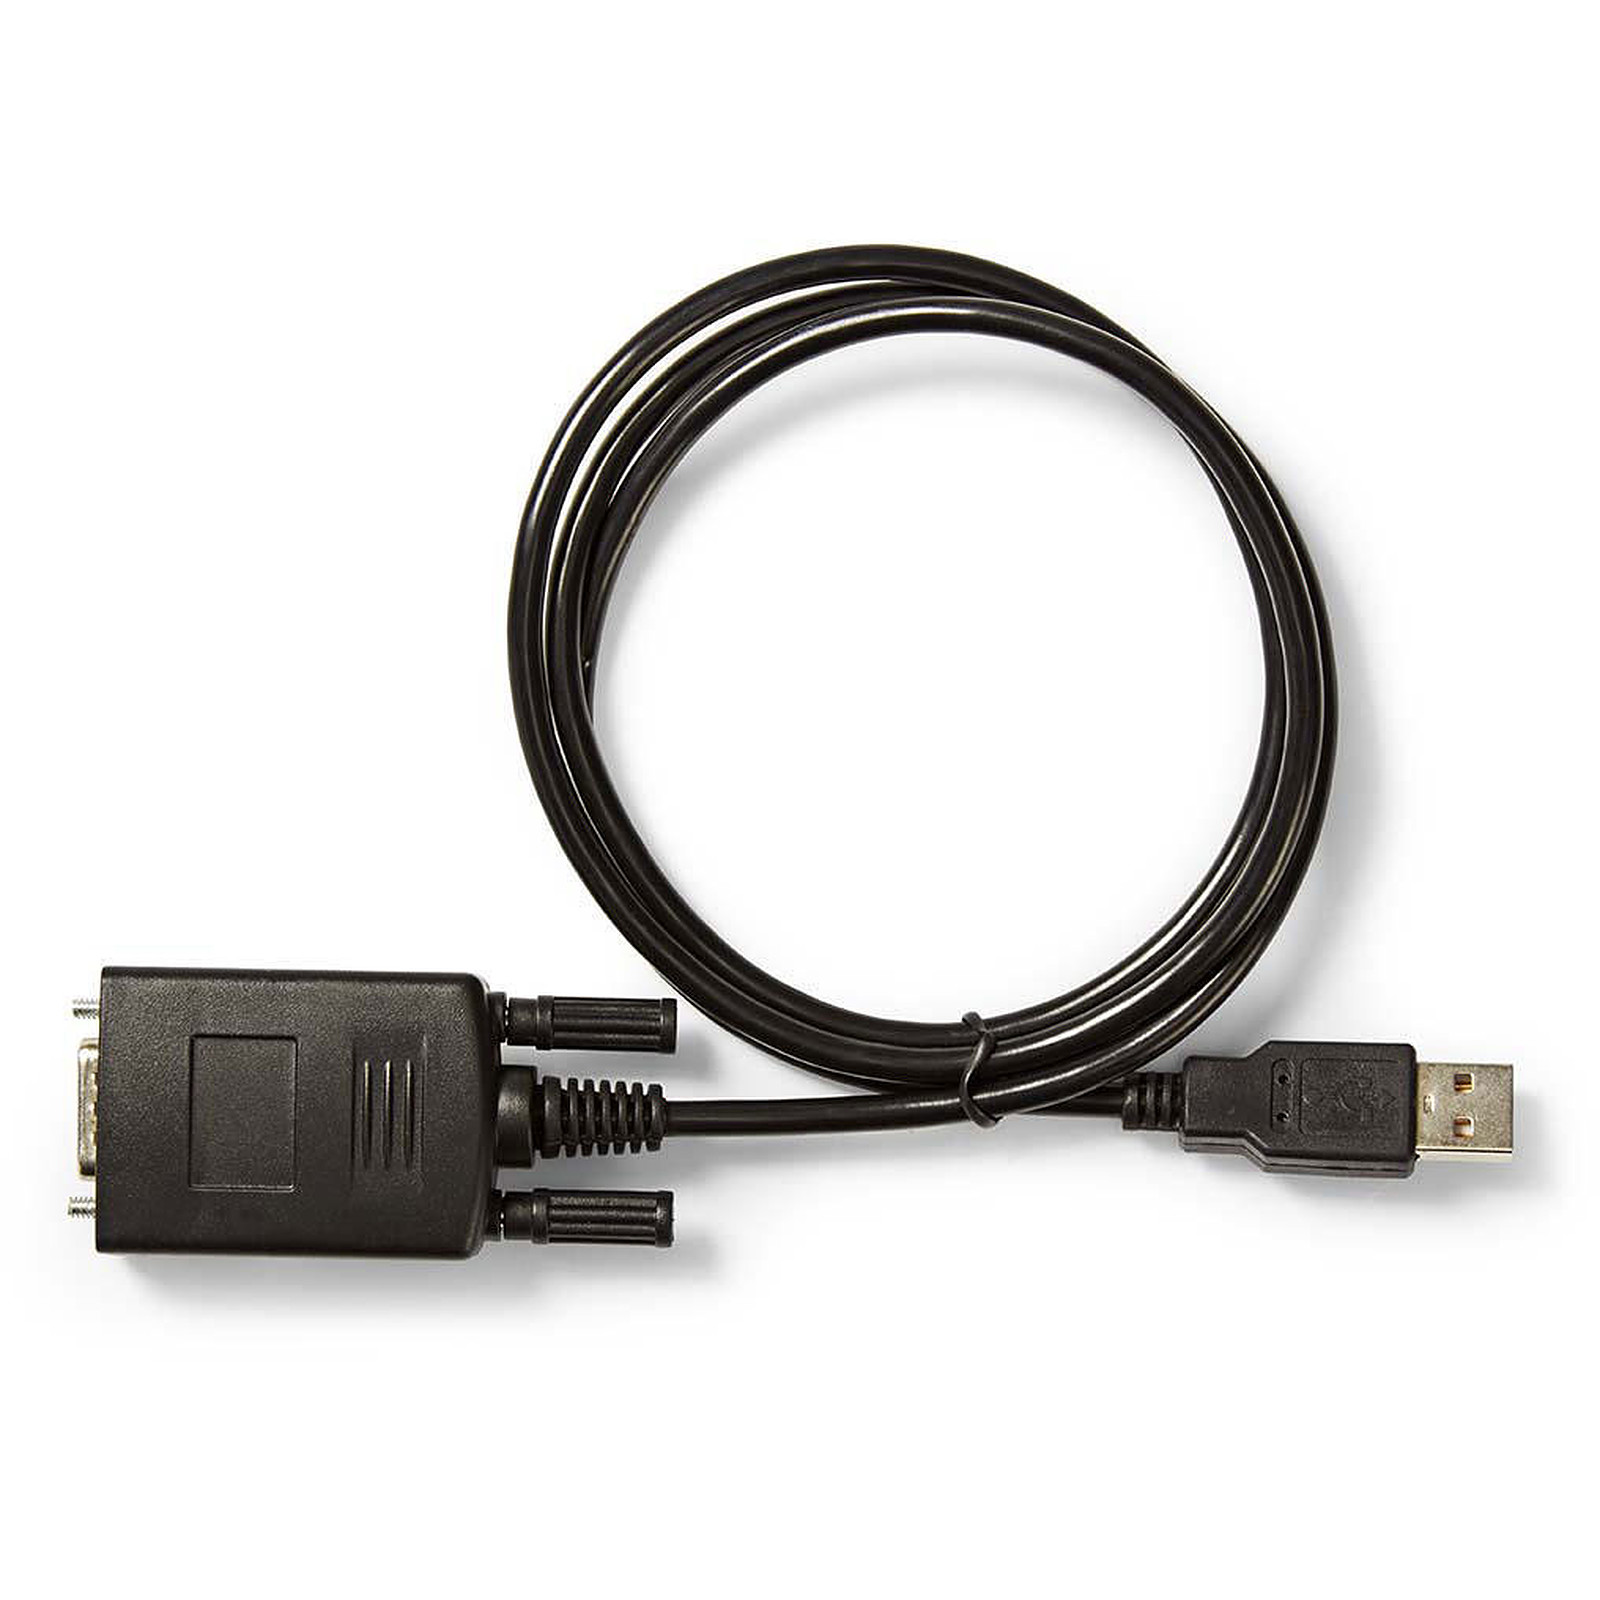 Nedis Adaptateur USB pour peripherique serie (DB9) - 0.9 m - USB NEDIS